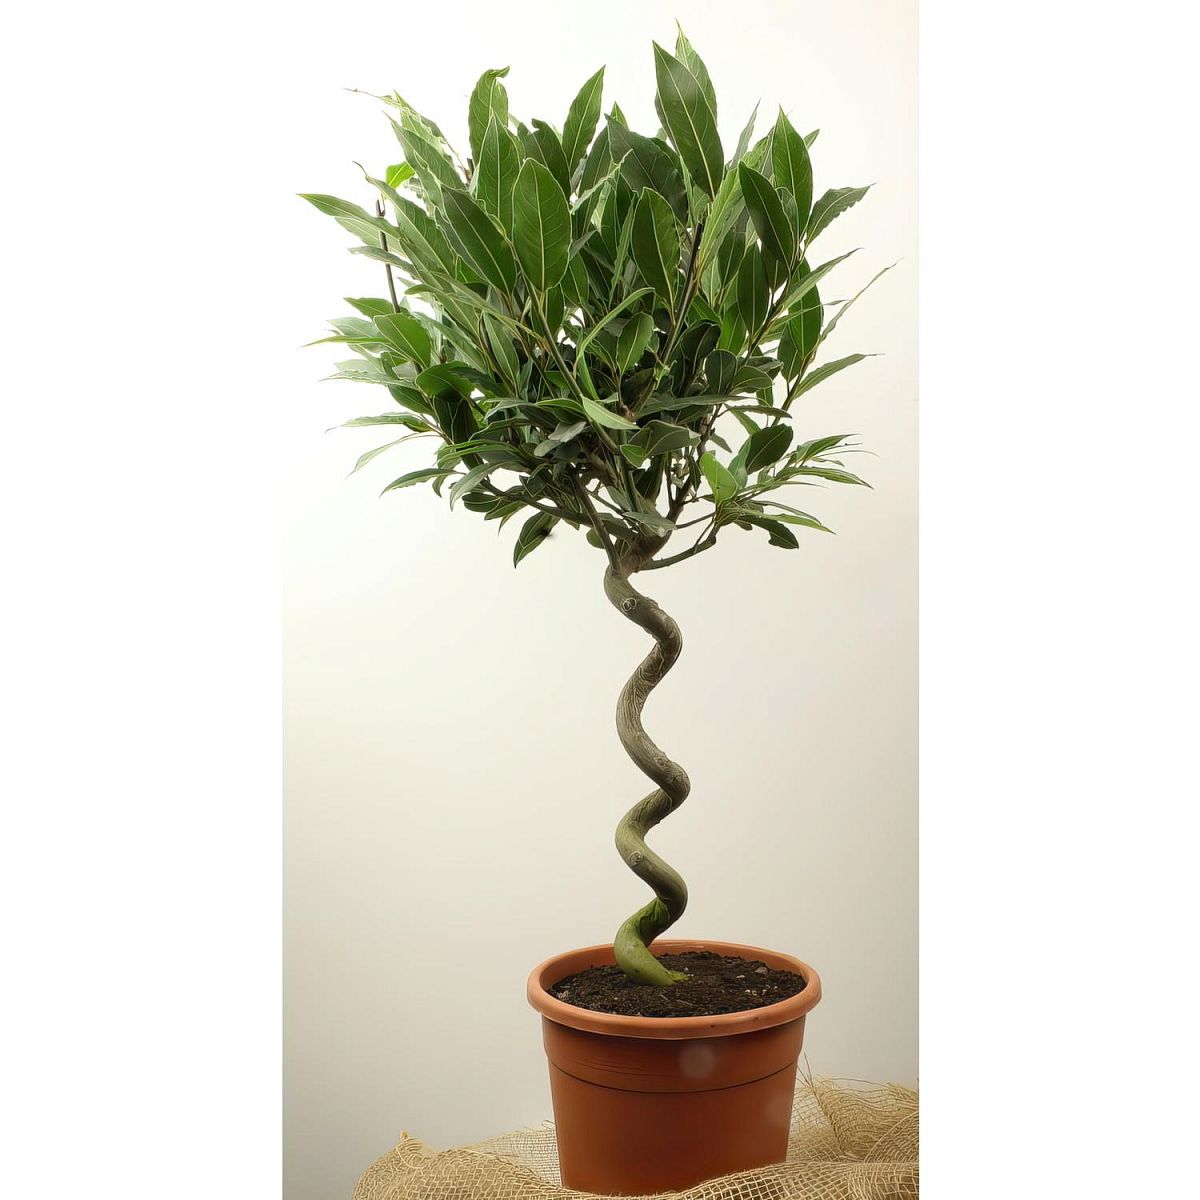 Lush Bay Tree Bay tree spiral stem standard (Laurus Nobilis) Outdoor Live Plant